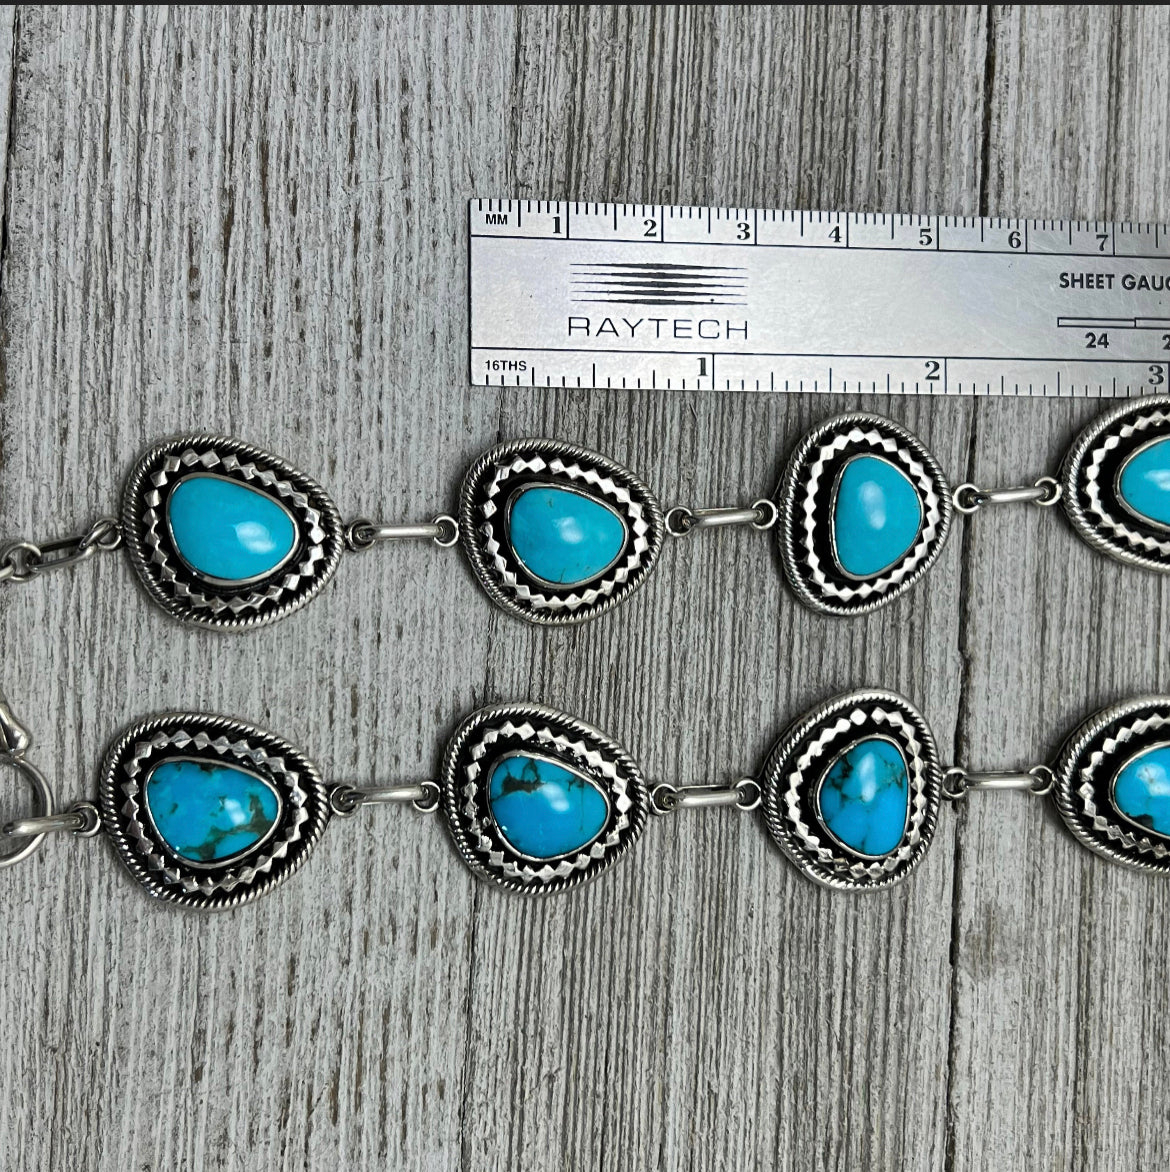 Kingman turquoise link bracelet, sterling silver, adjustable 7.5", 8", 8.5", Navajo handmade jewelry, long large bracelet toggle clasp